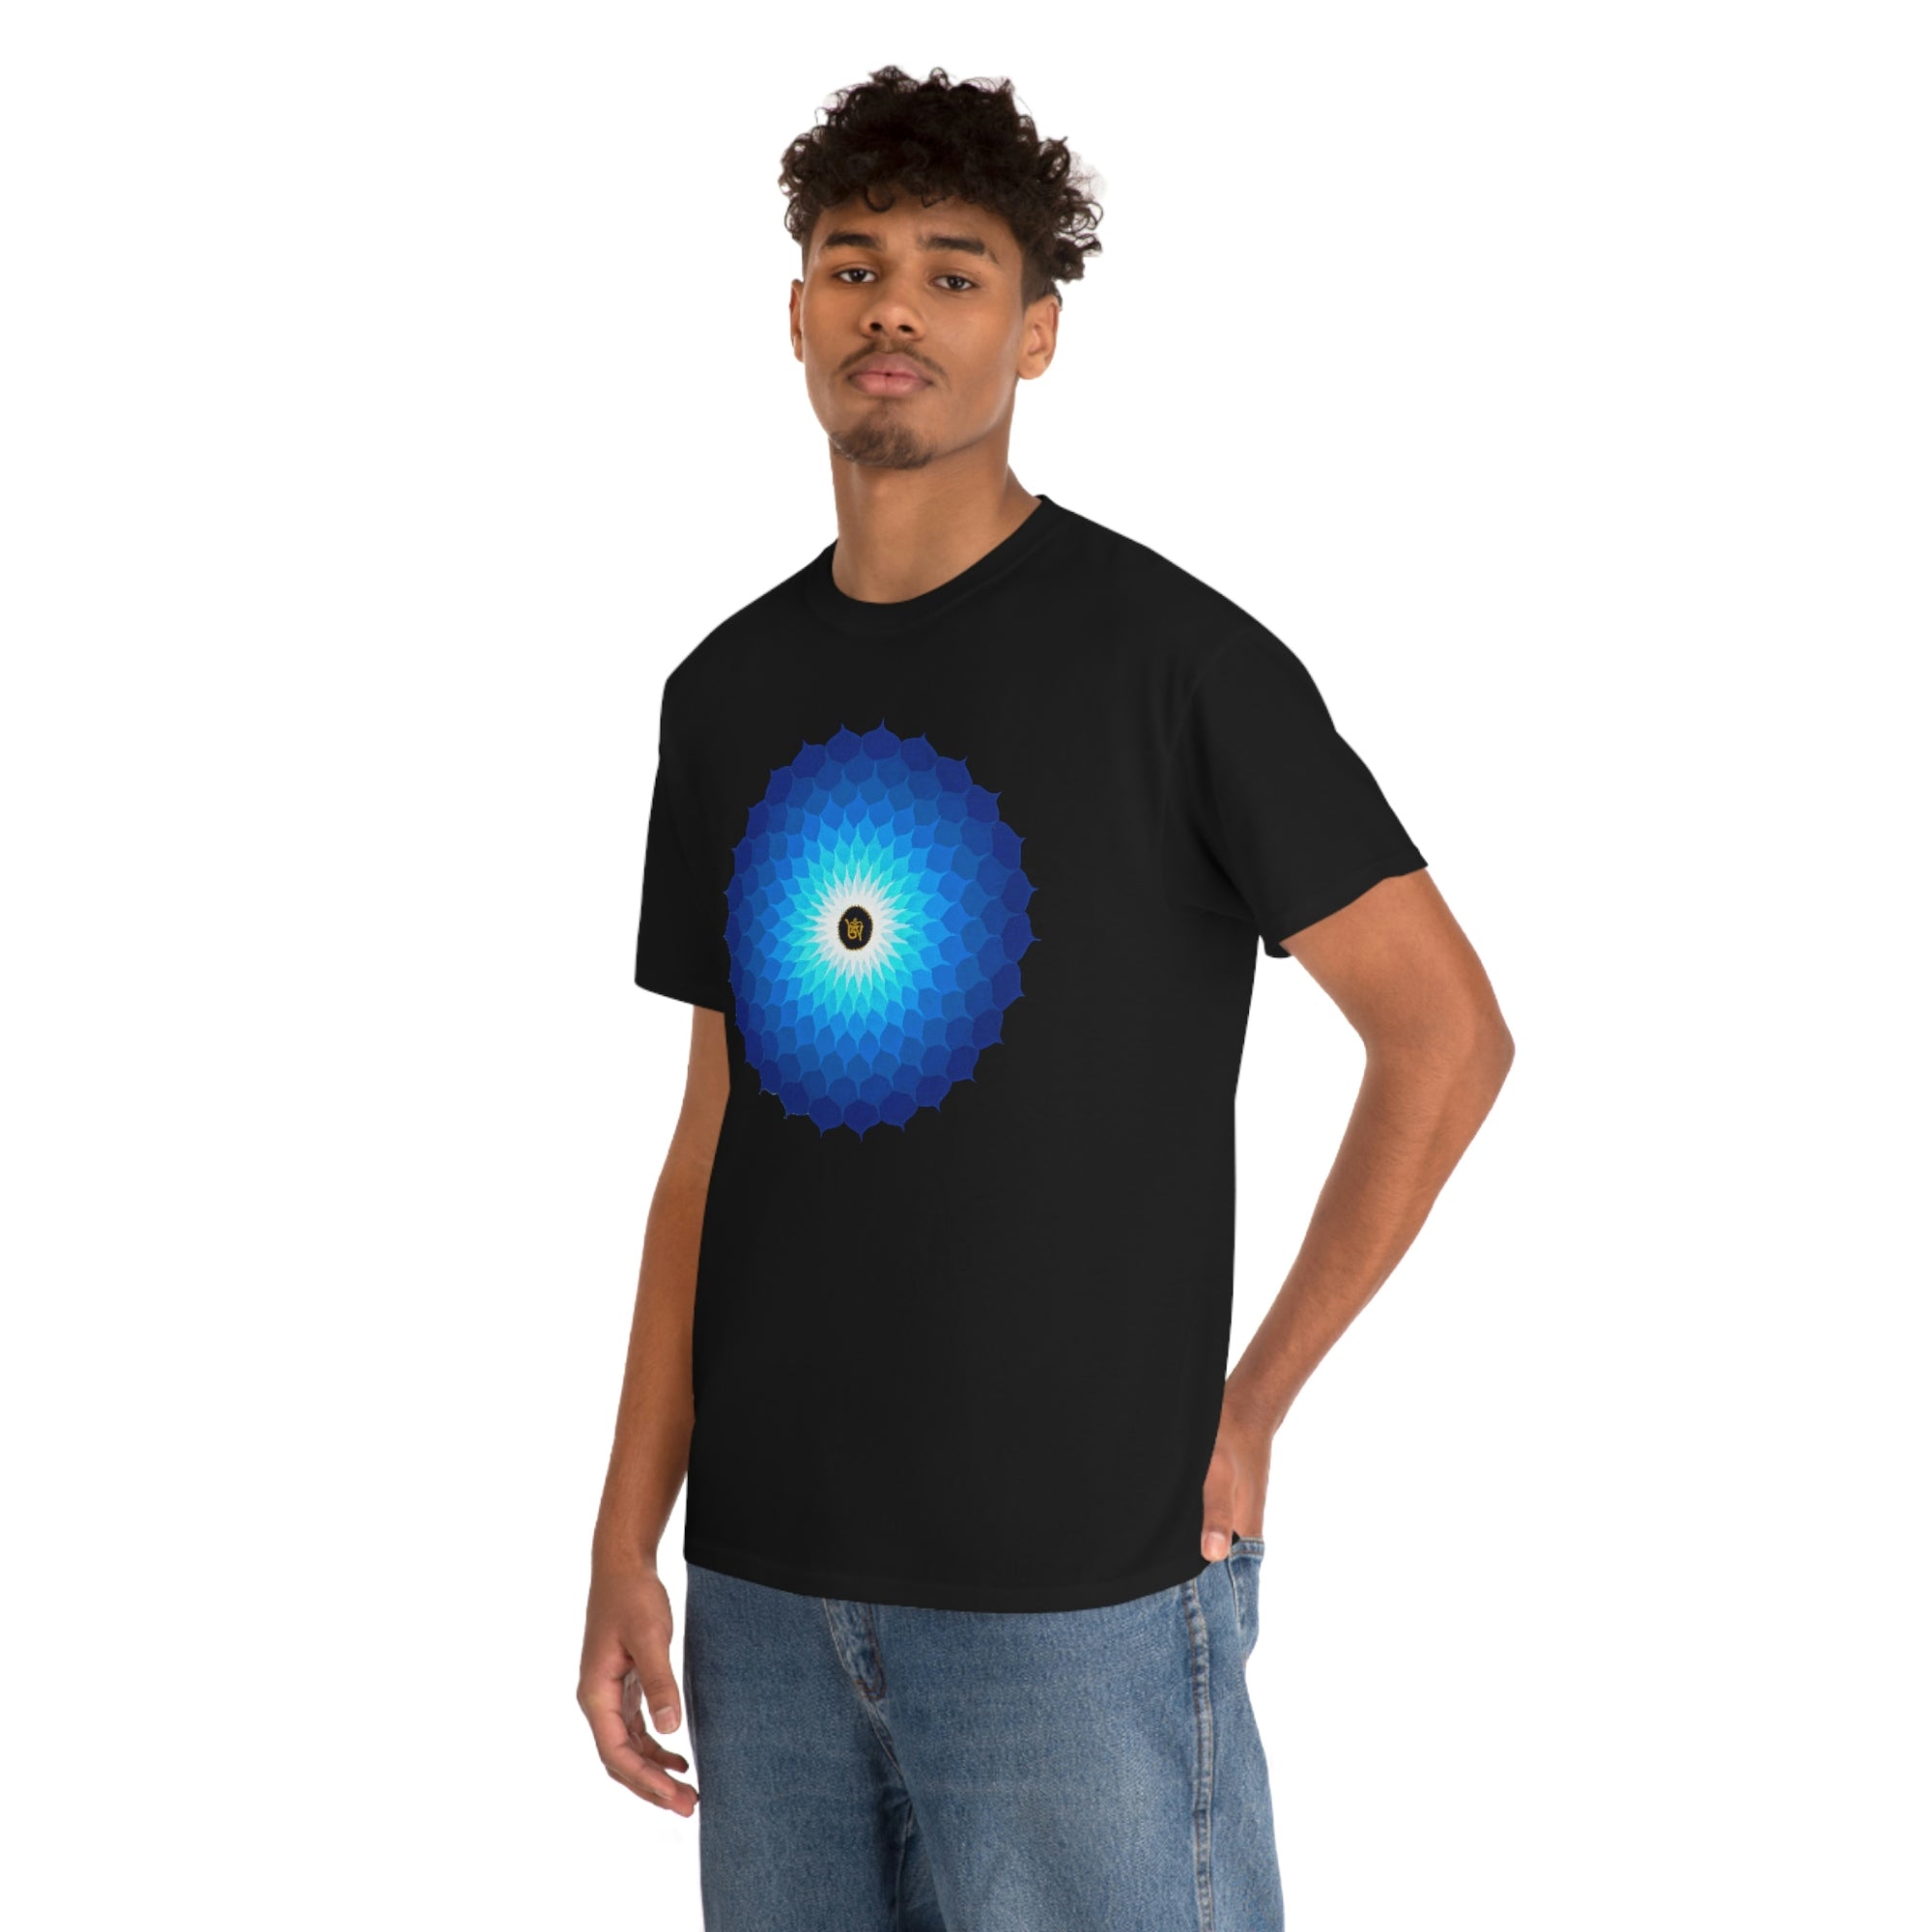 Blue Mandala Bliss - Unisex T-shirt